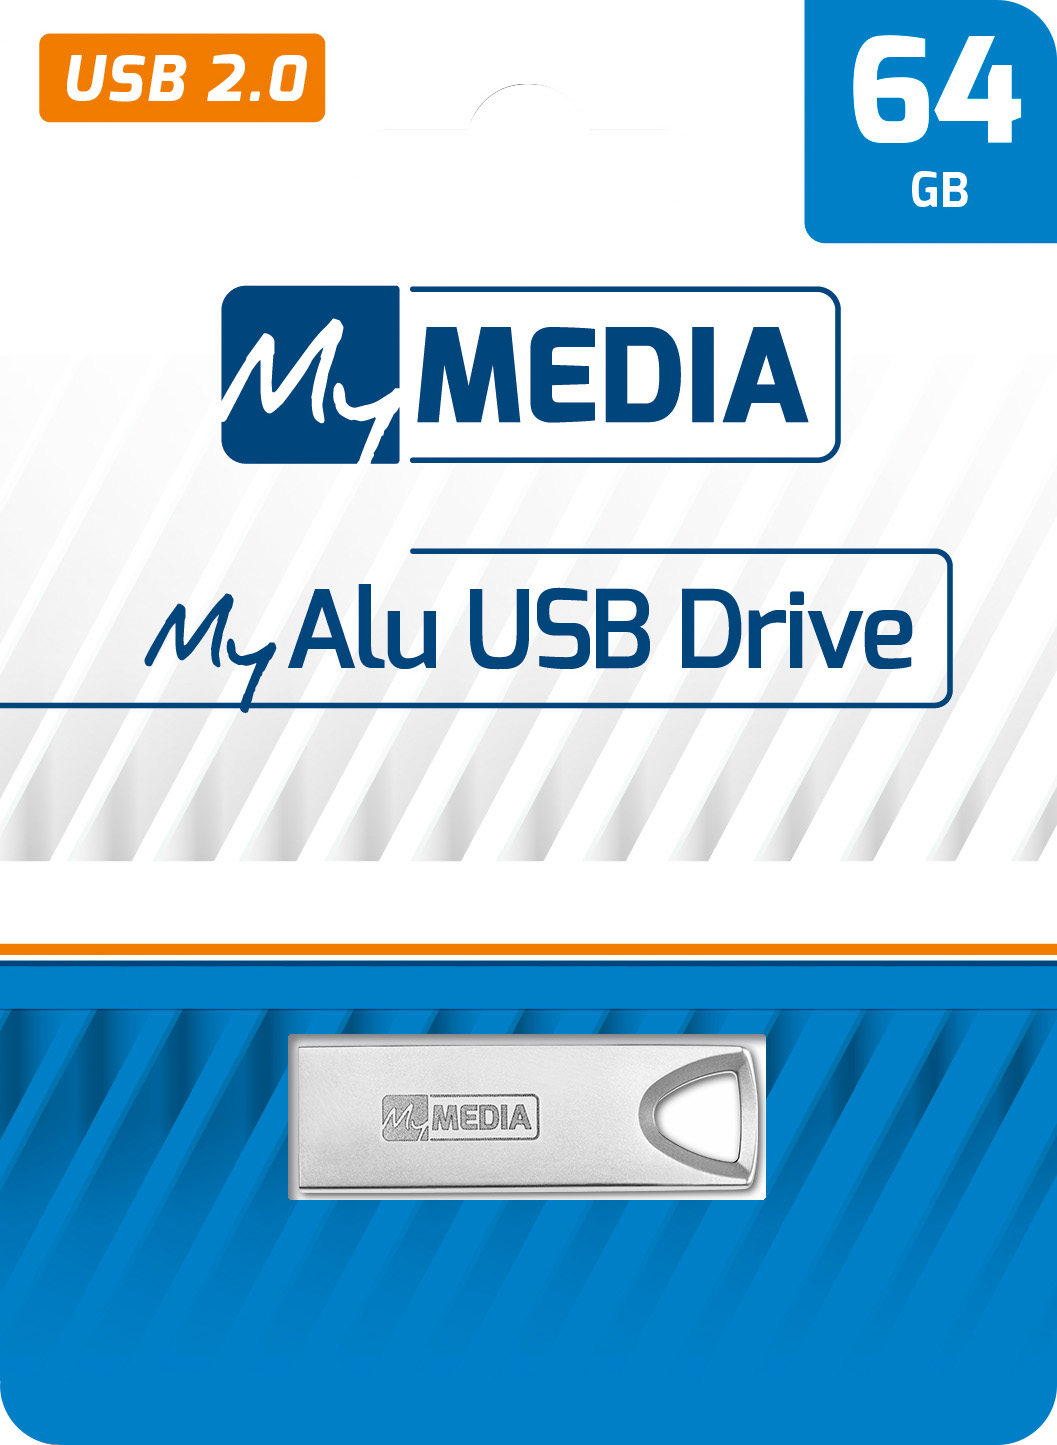 Mymedia USB 2.0 Stick 64GB, My Alu, silber Retail-Blister